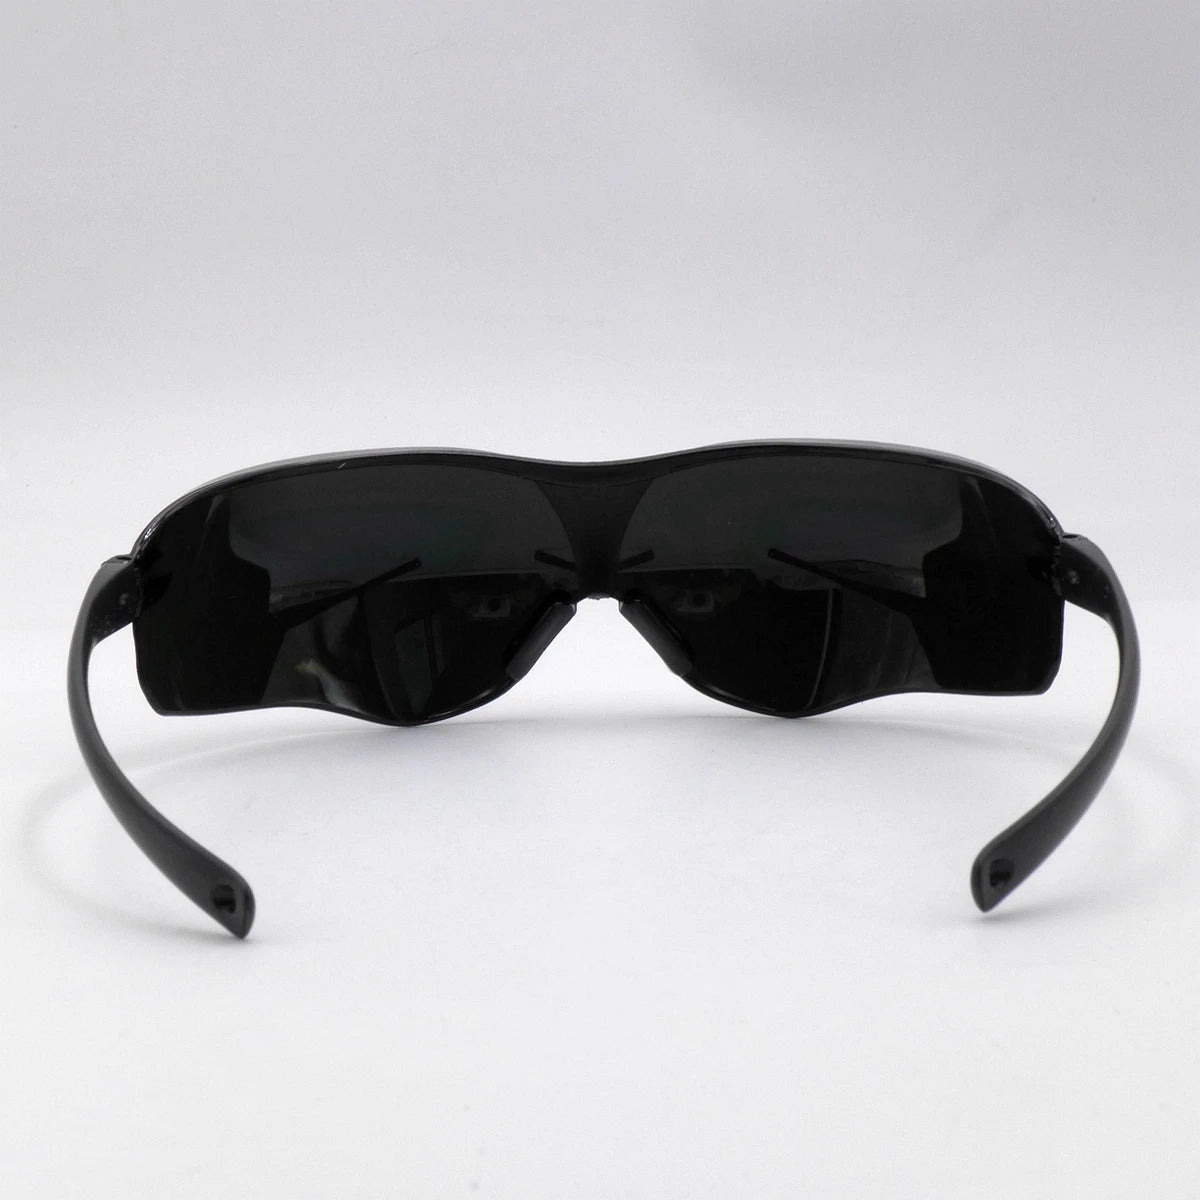 Welding Lens Eyes Mask Welder Glasses for Grinding ARC MIG TIG Welding